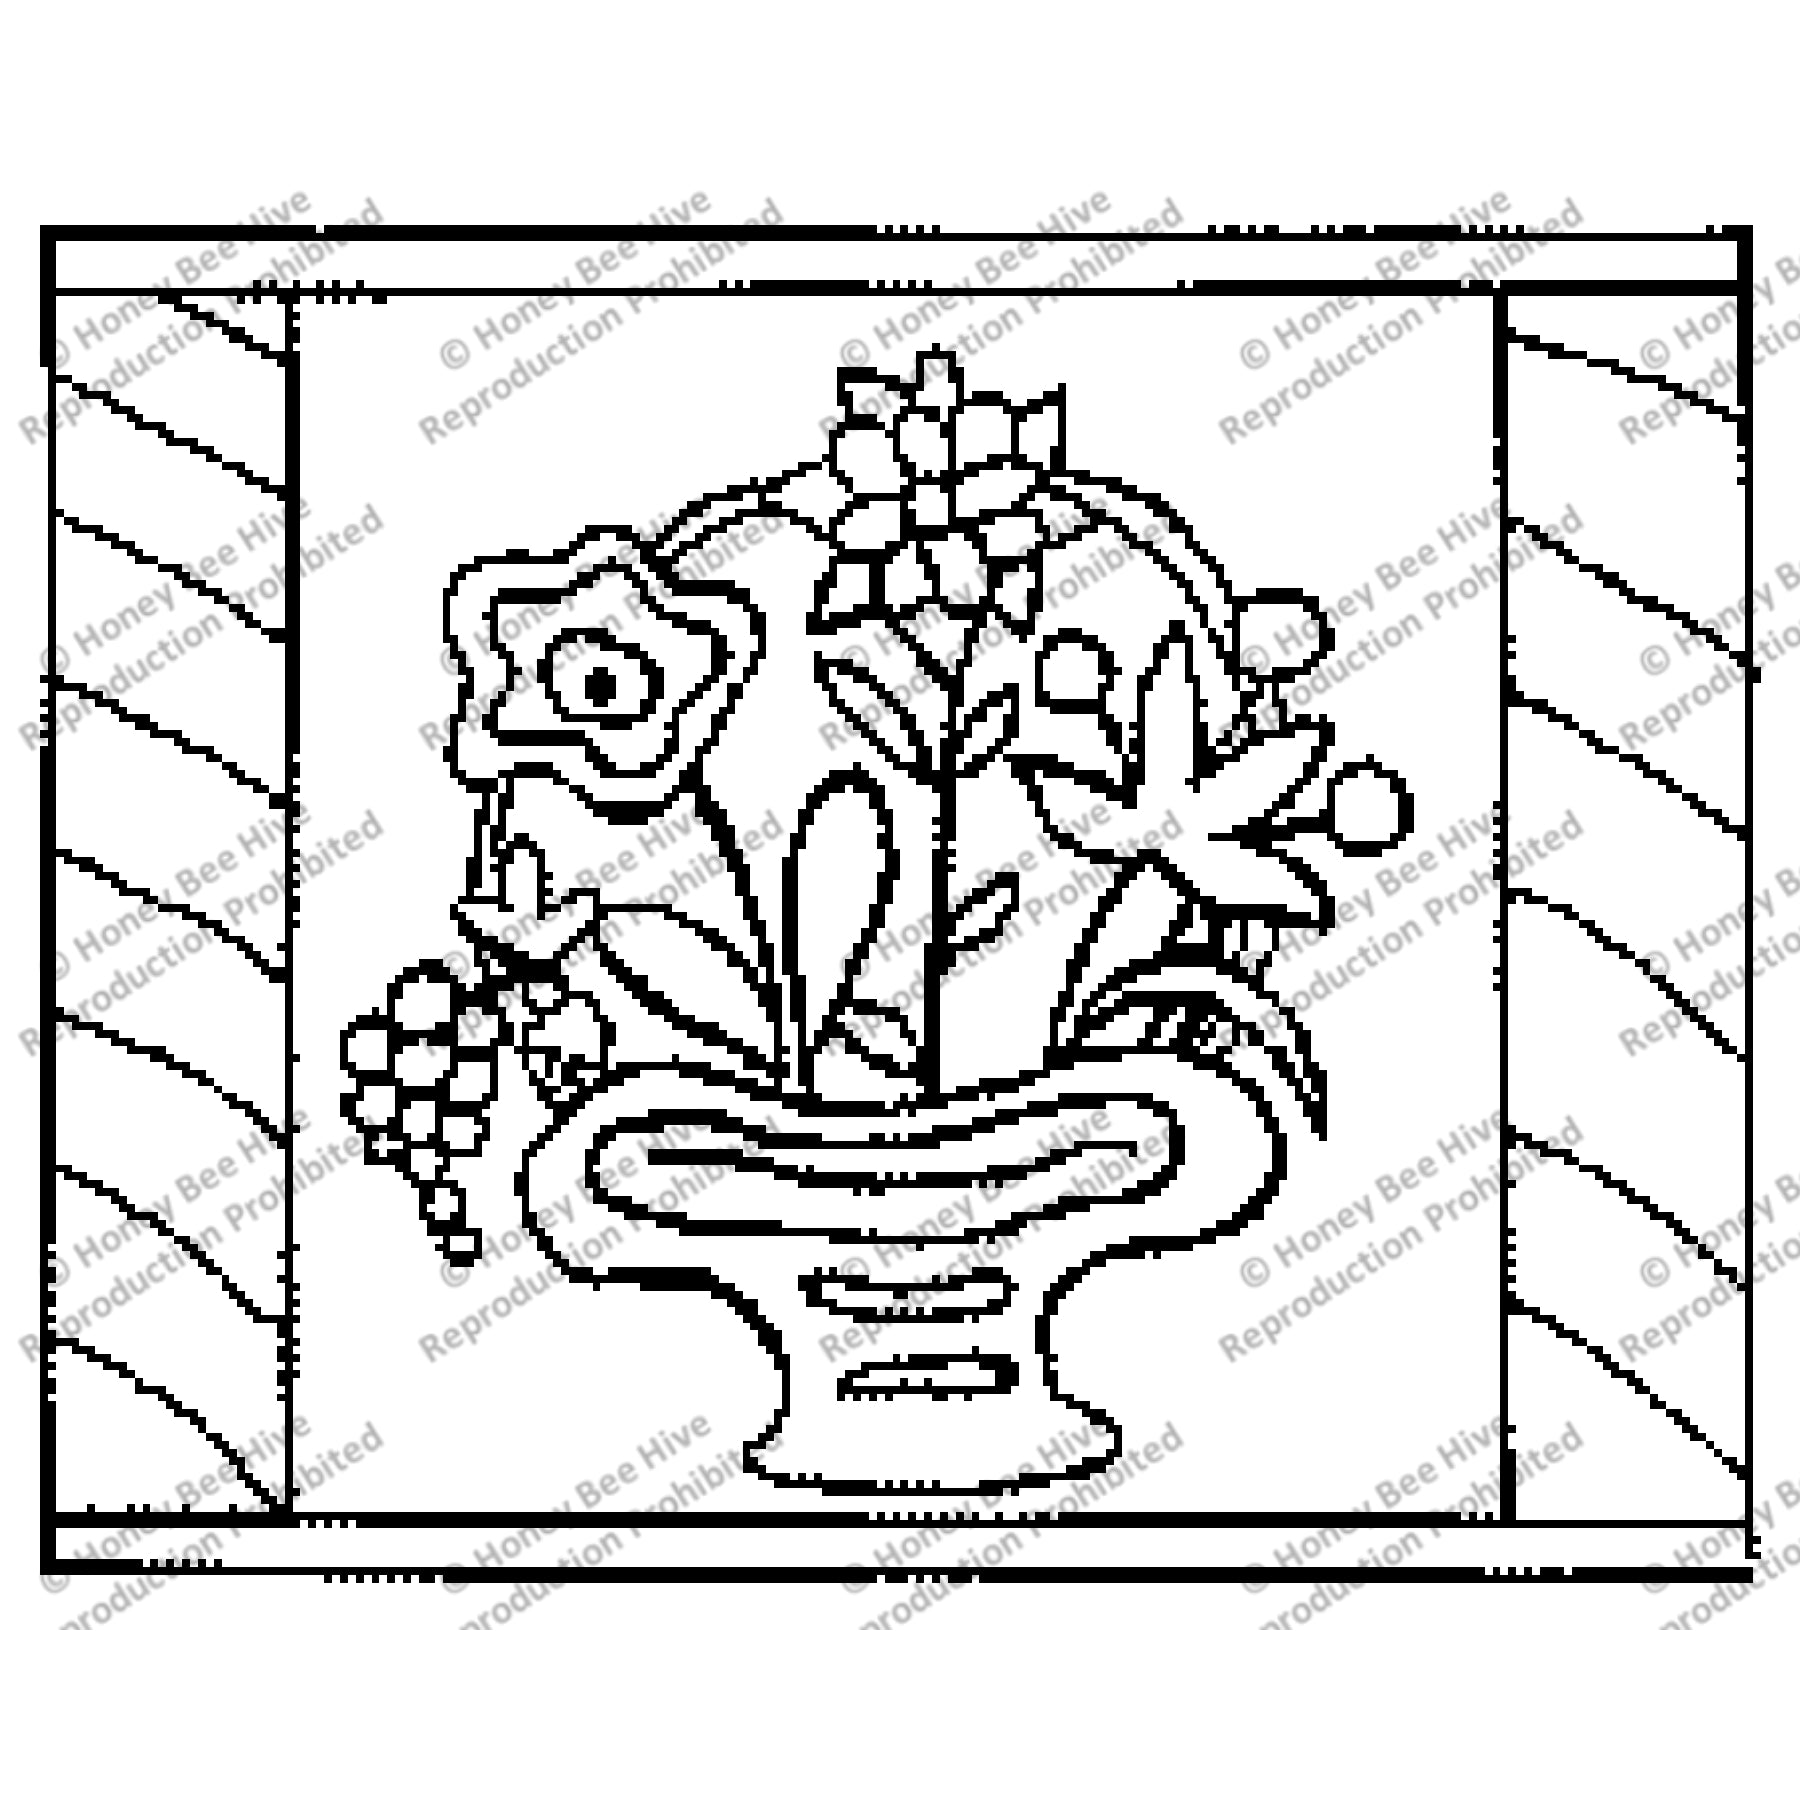 Flower Basket, rug hooking pattern